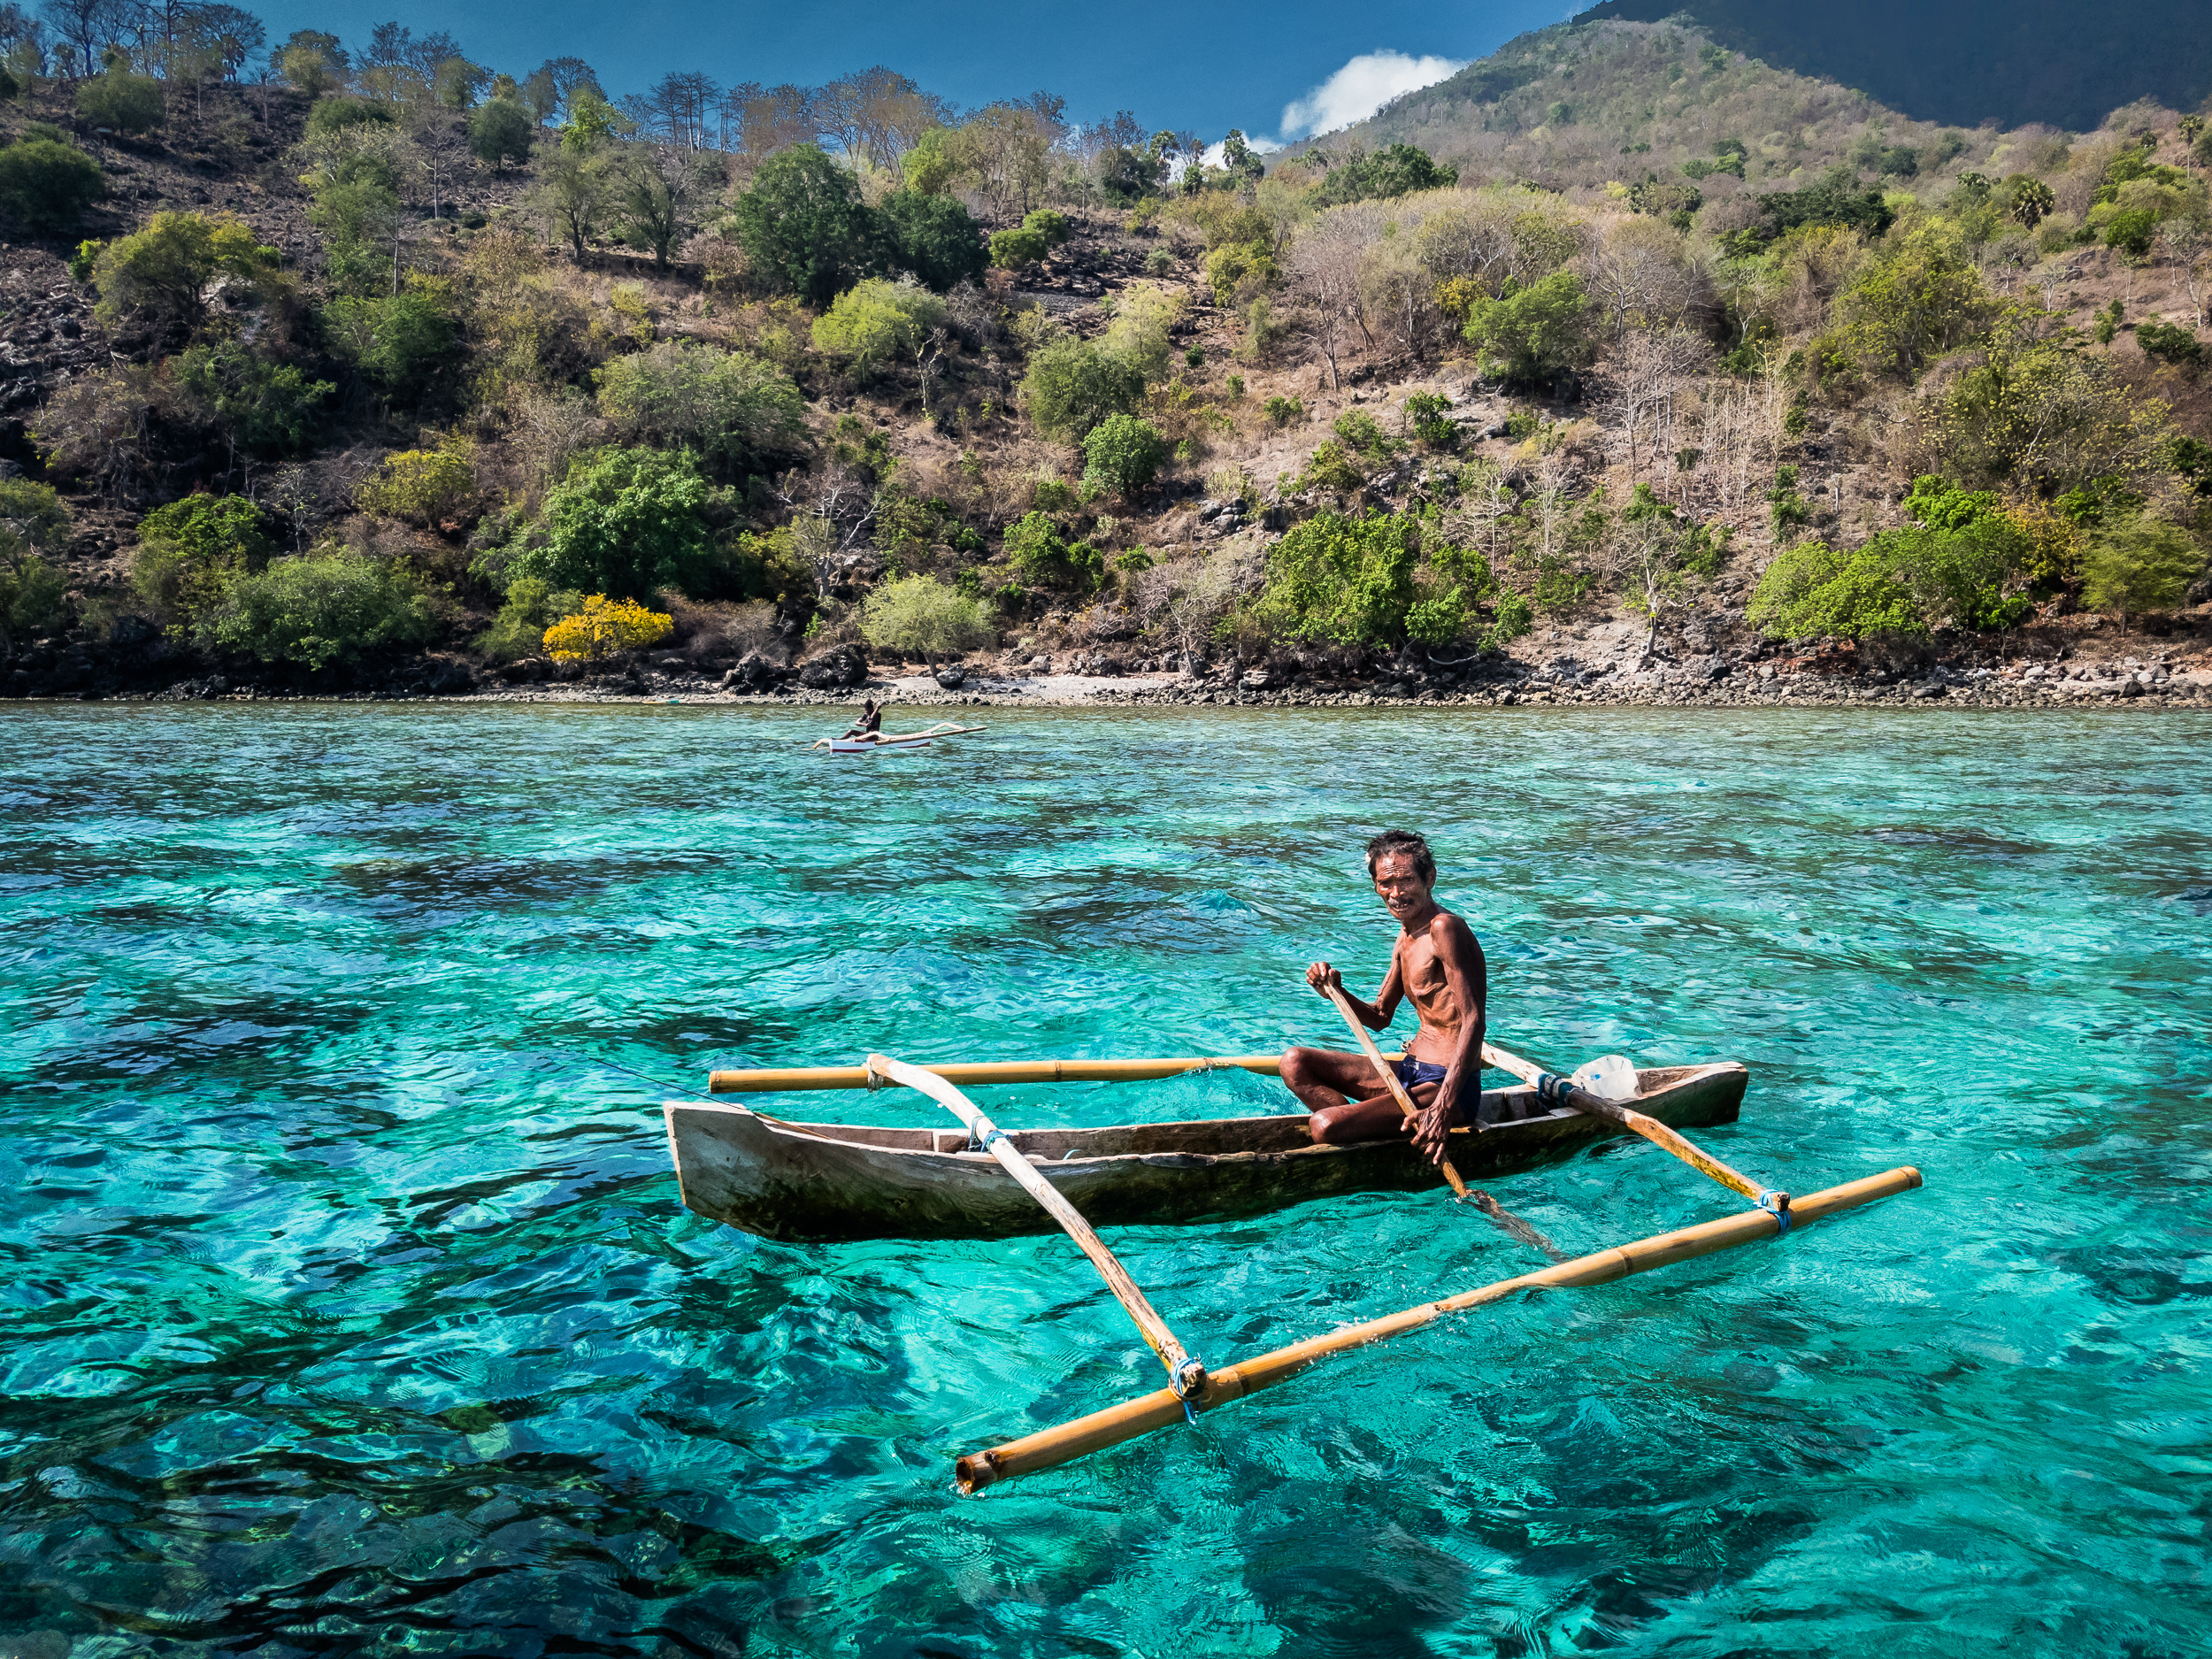 Fisherman, Alor, Indonesia